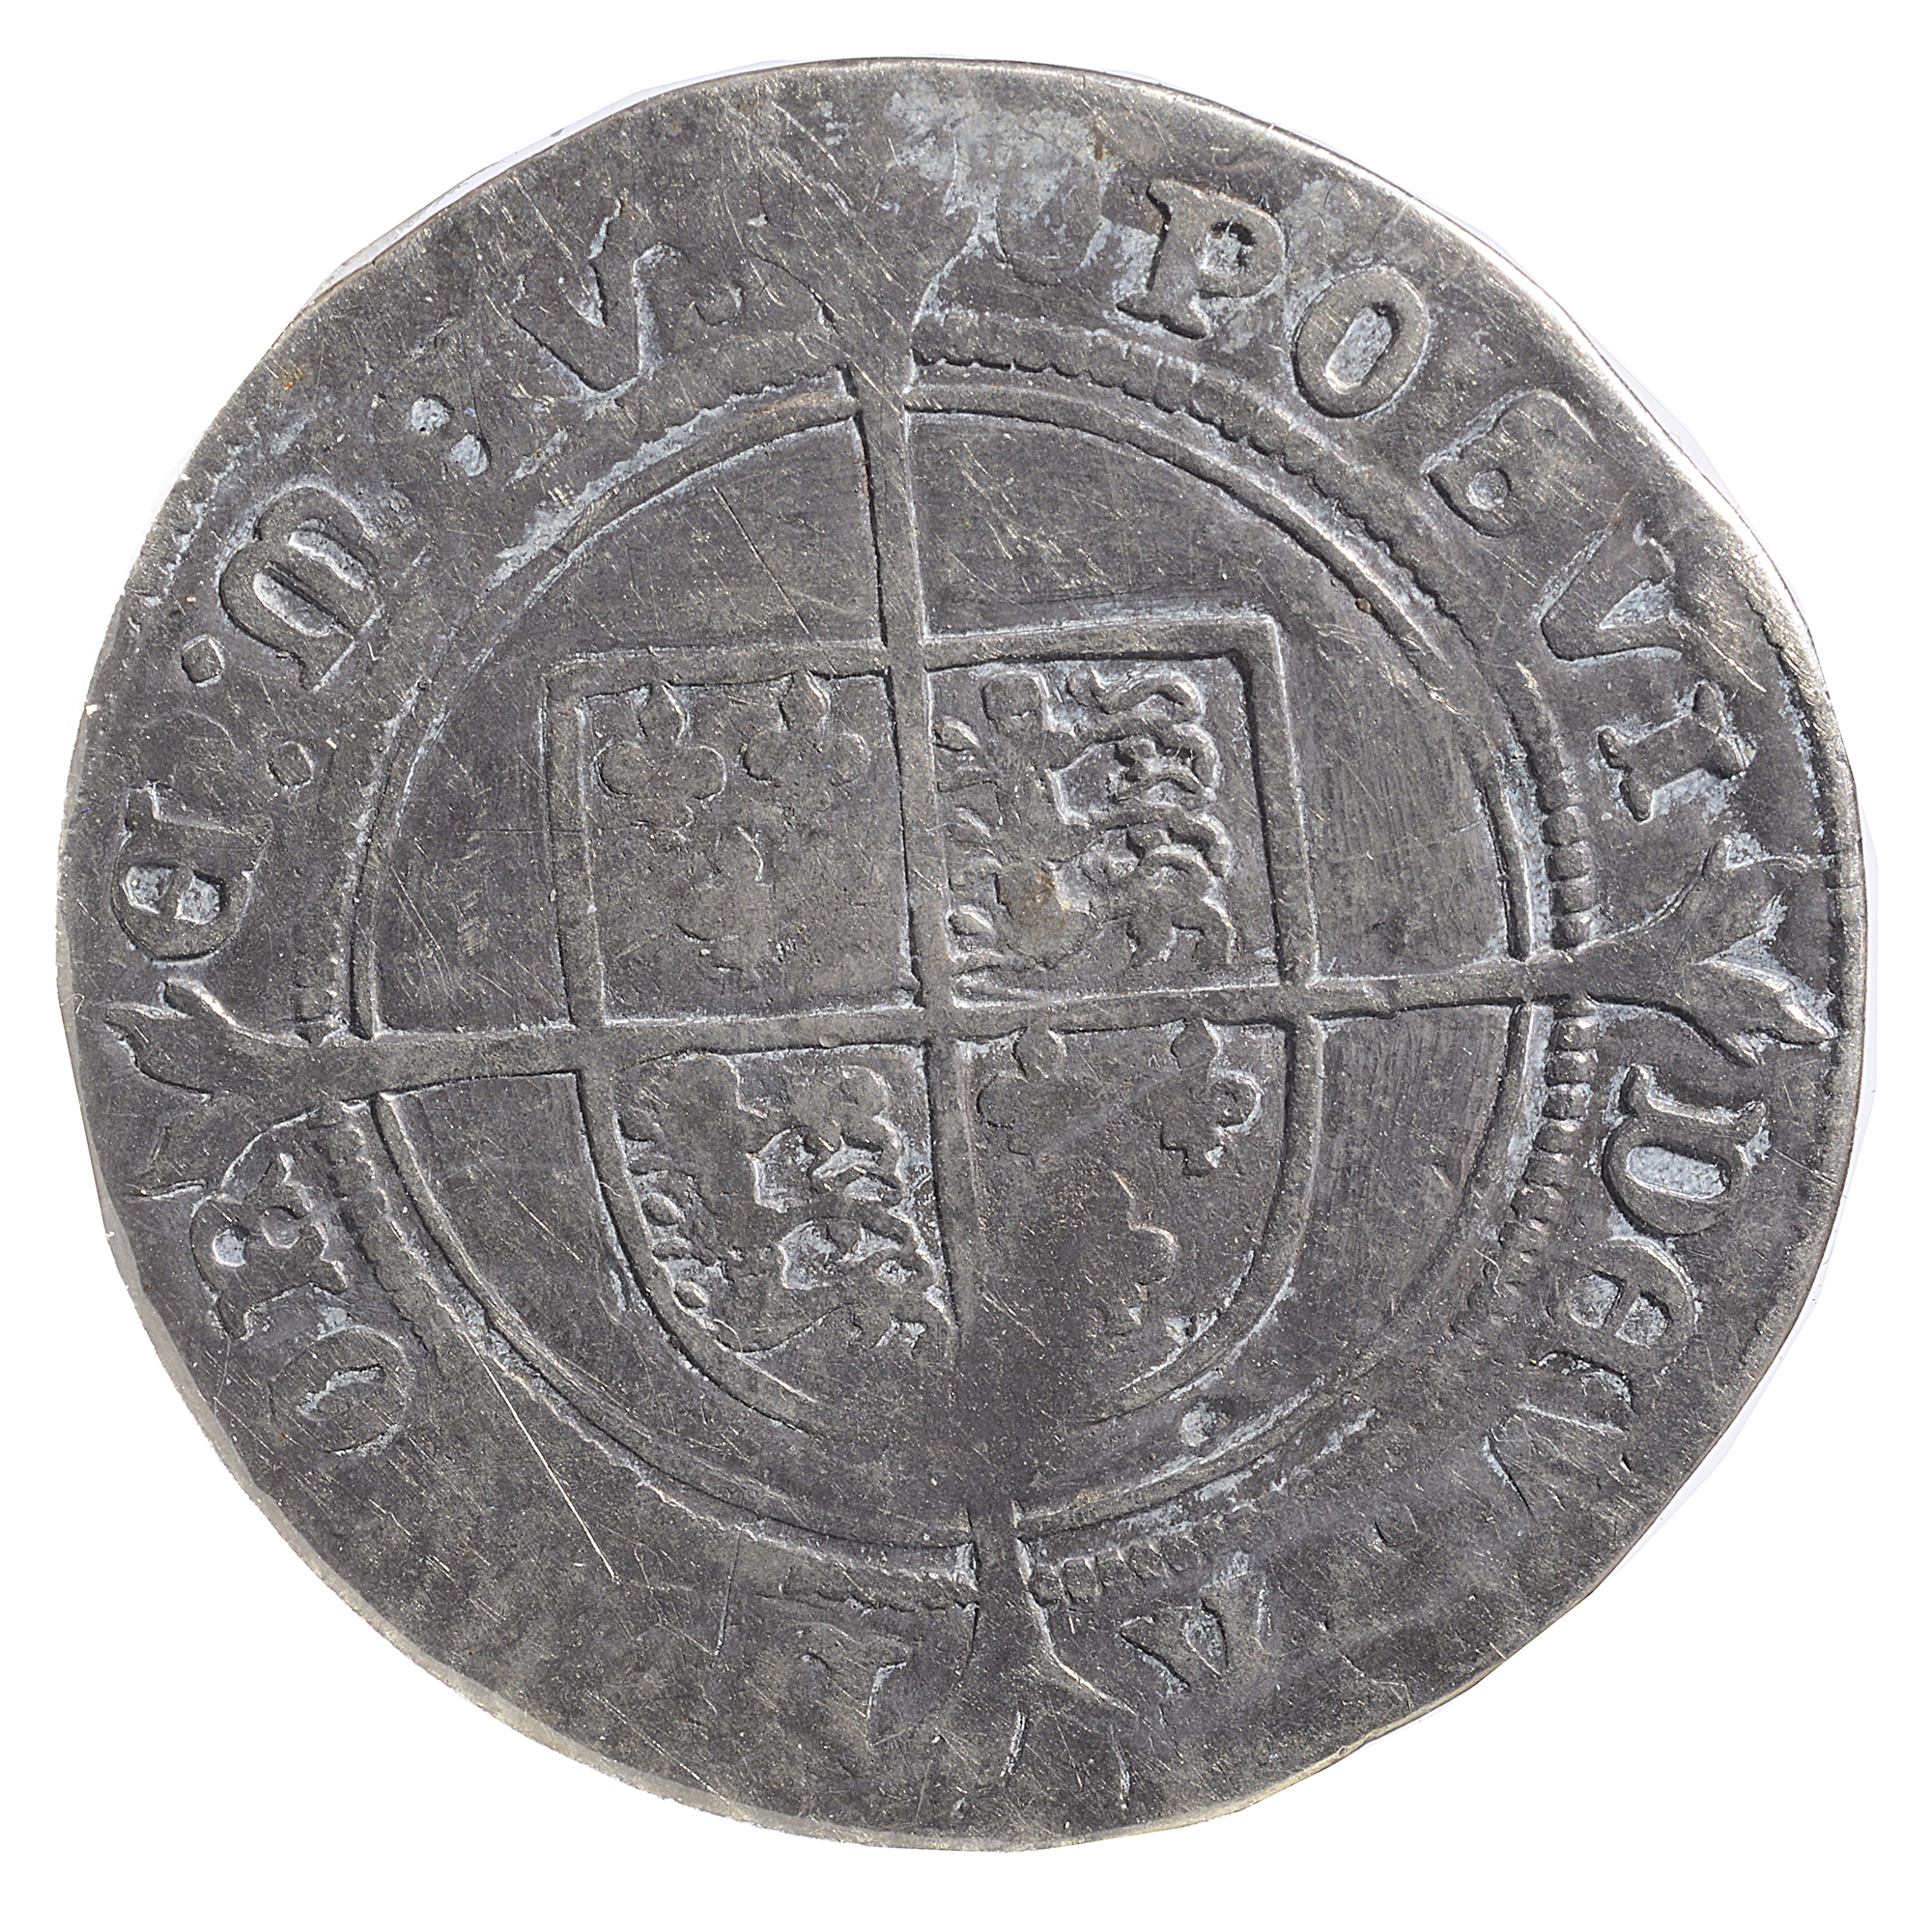 Edward VI (1547-1553) silver shilling Fine silver issue 3rd period, London Mint, mint mark TunEDWARD - Image 2 of 2